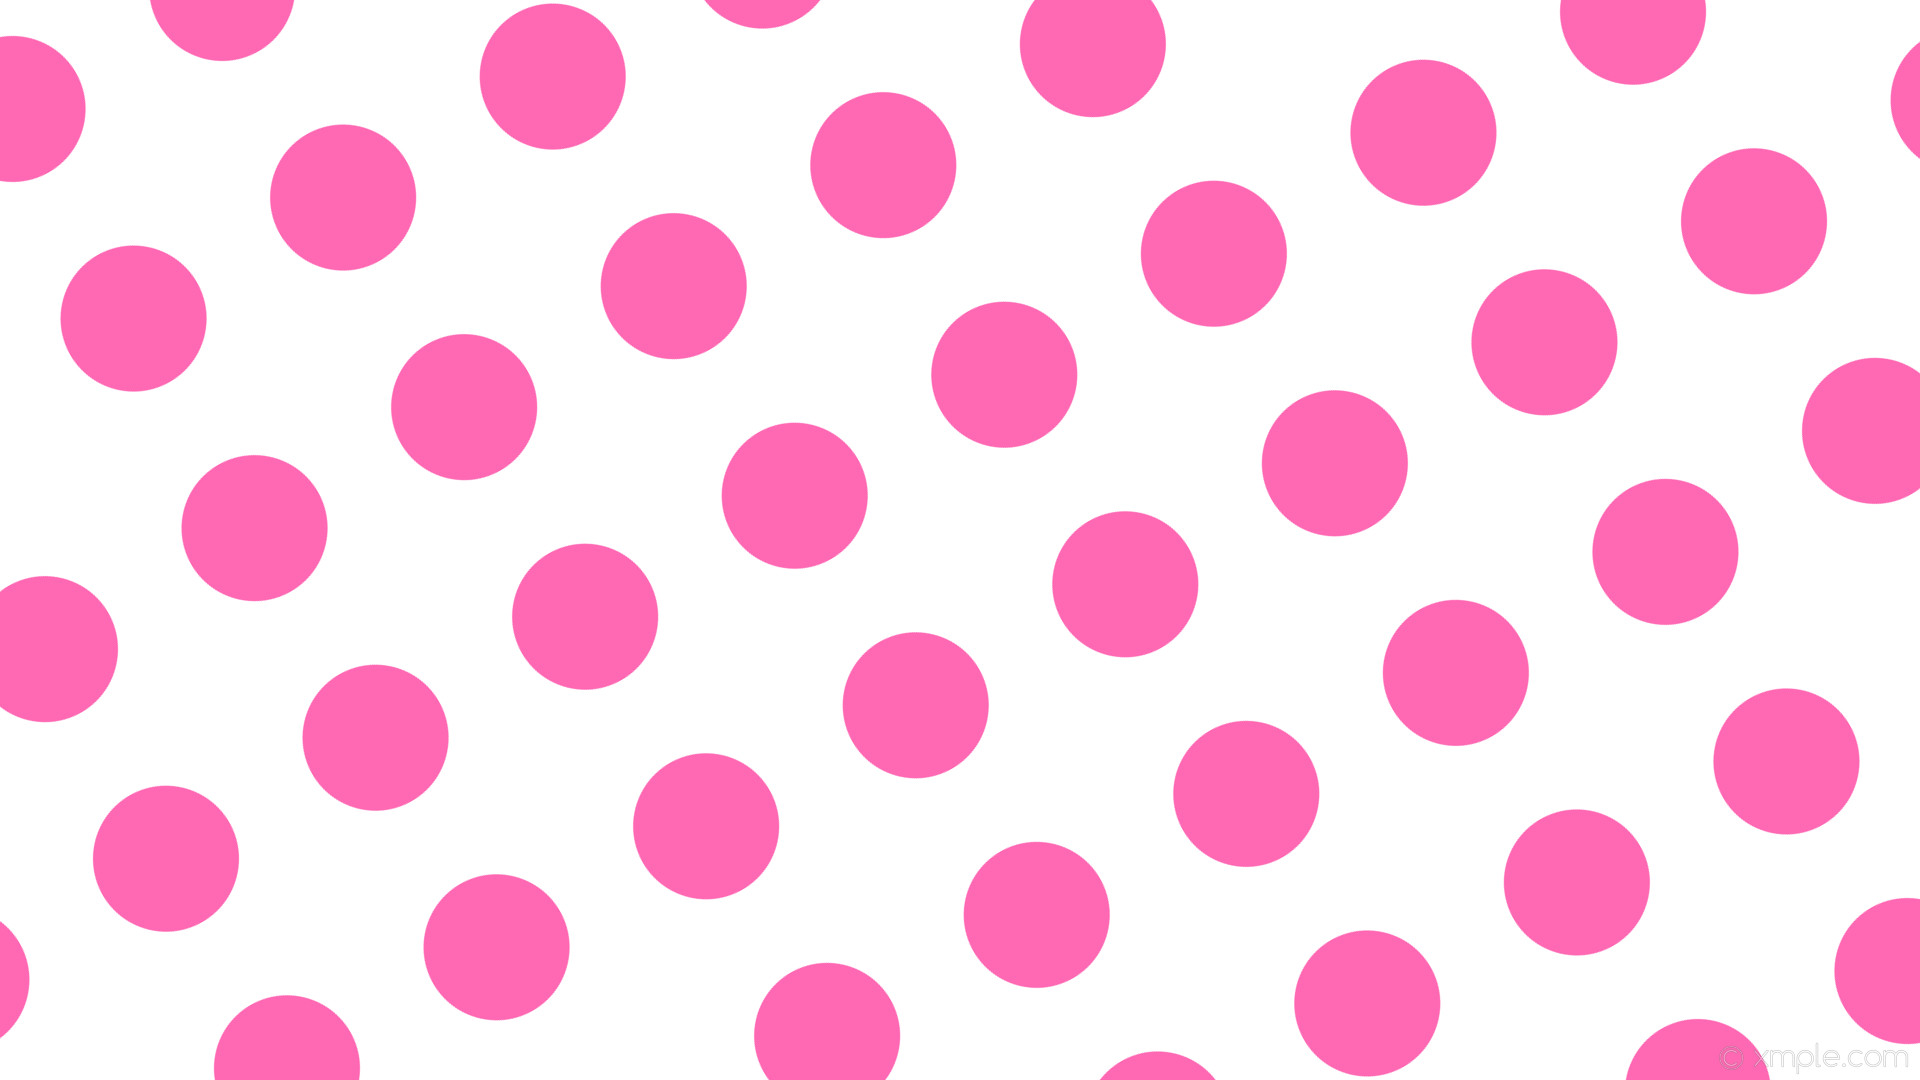 Wallpaper white polka dots spots pink hot pink #ffffff #ff69b4 210 146px 242px